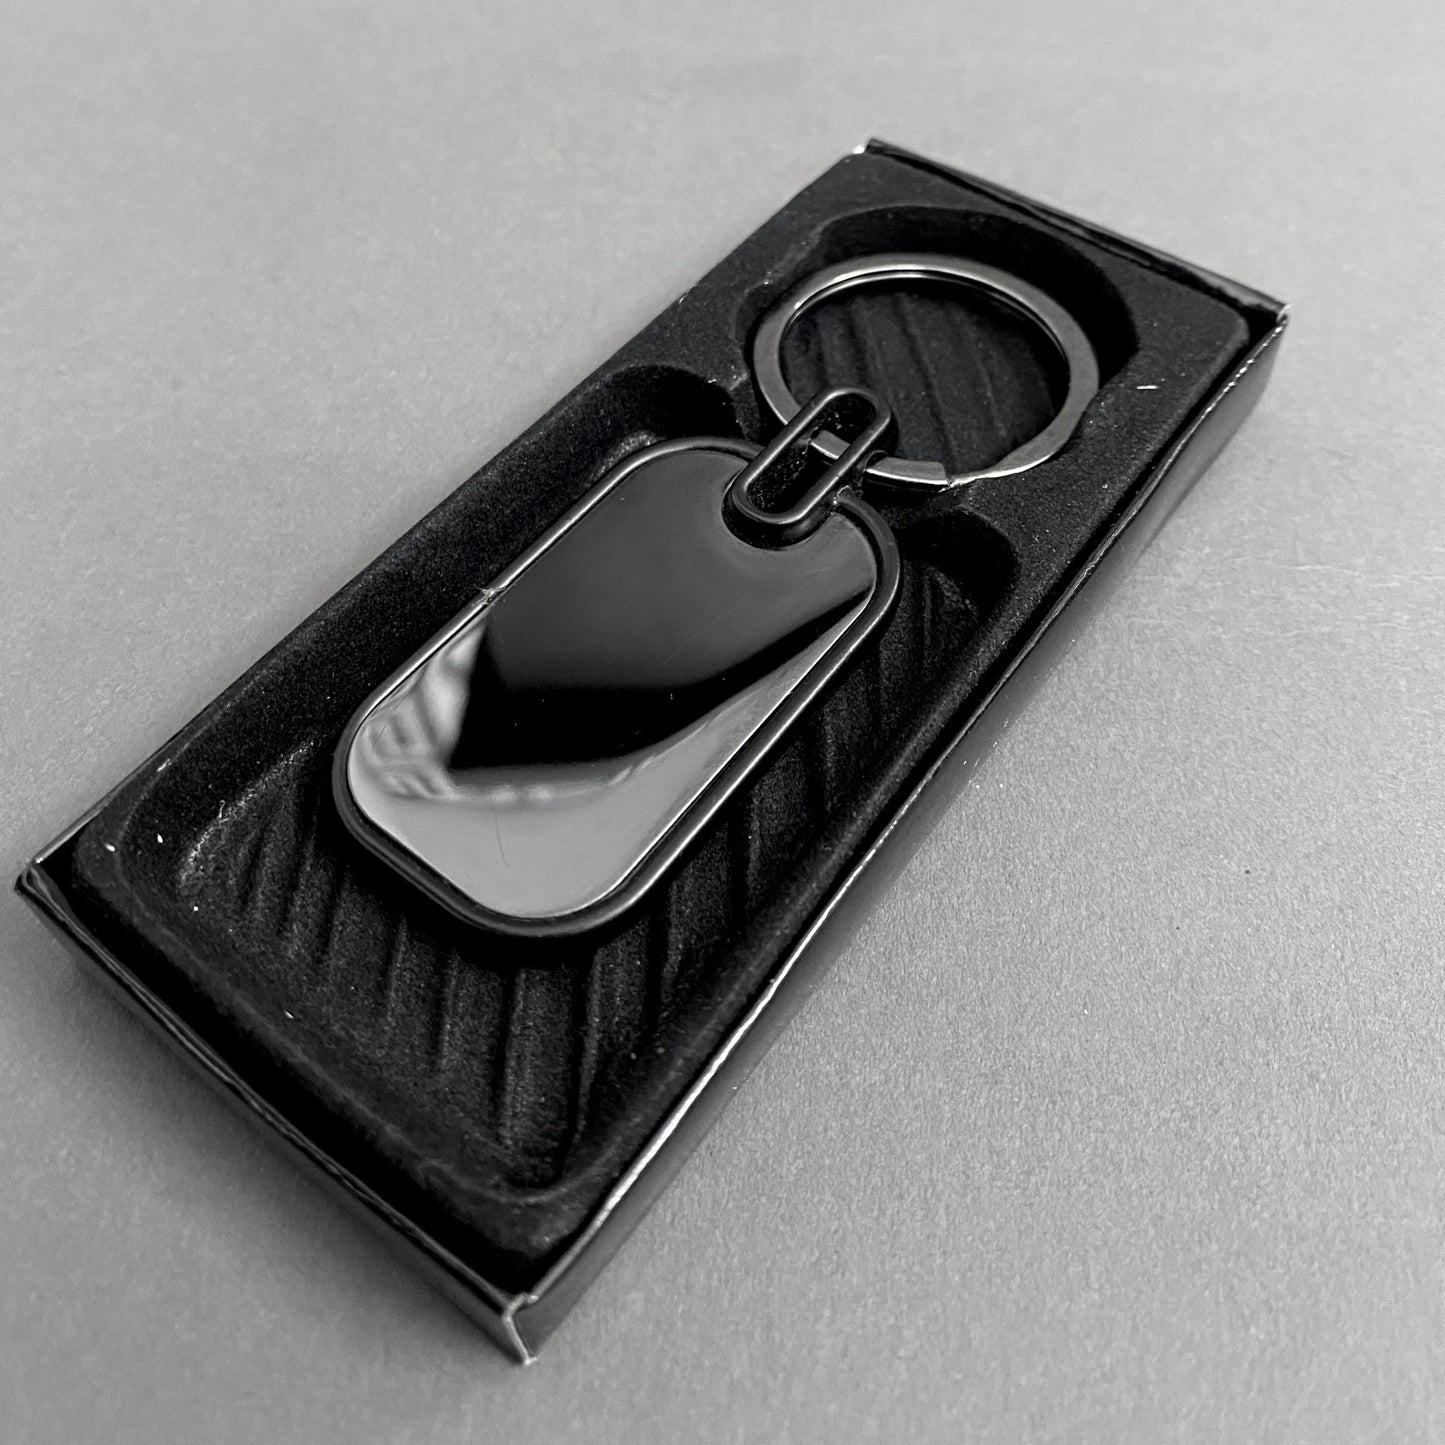 The Black Keychain